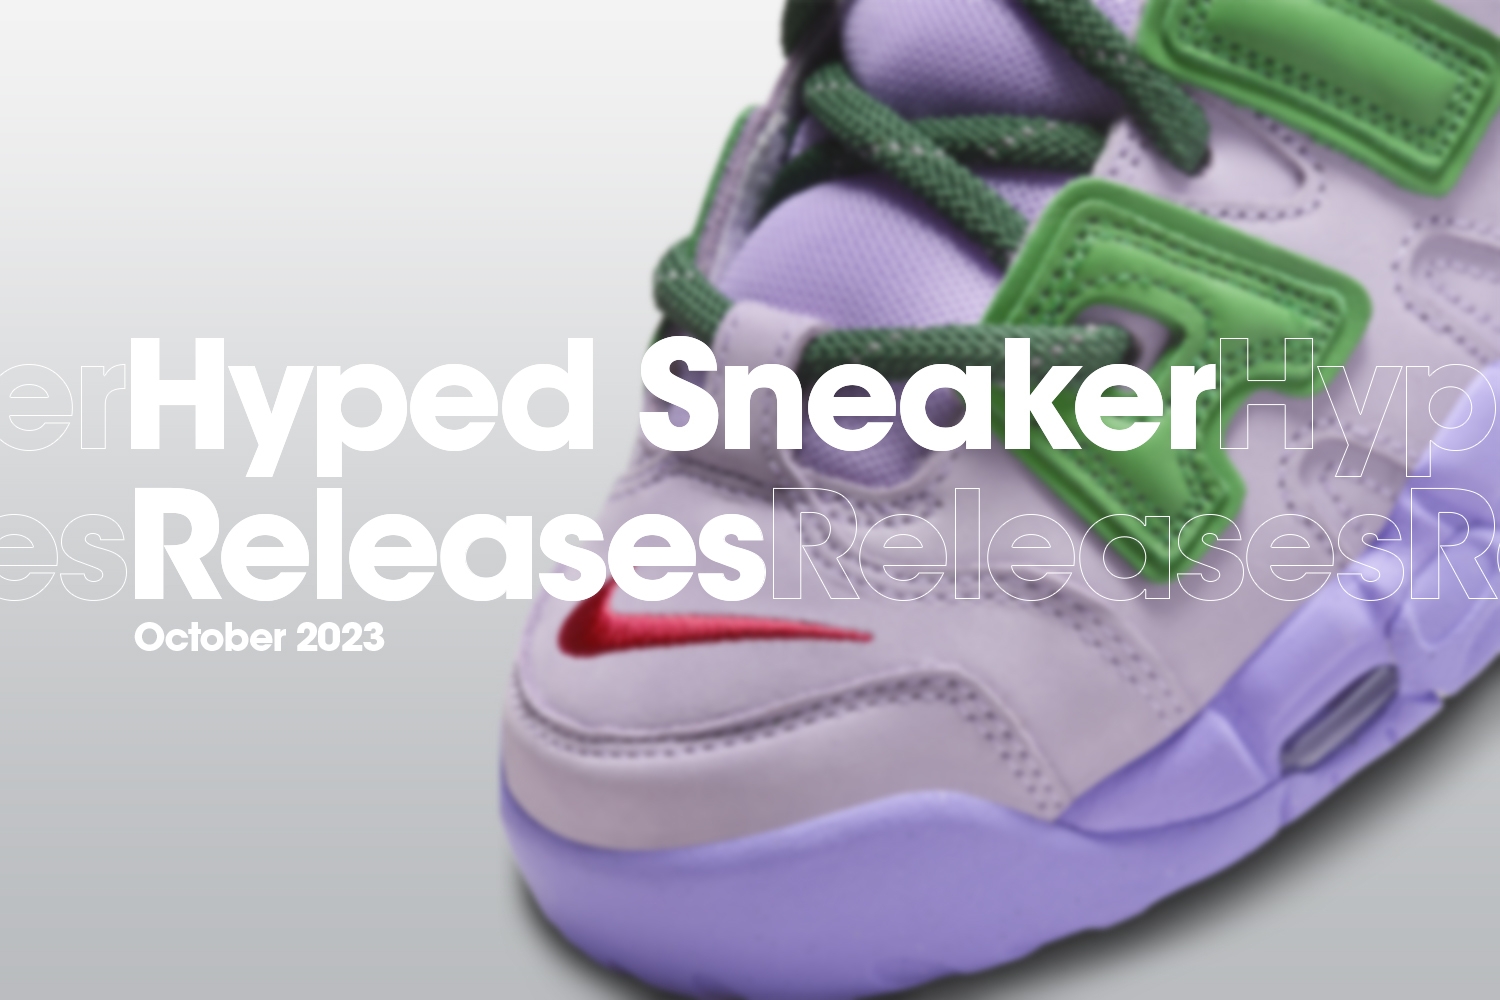 Die hyped Sneaker Releases von Oktober 2023